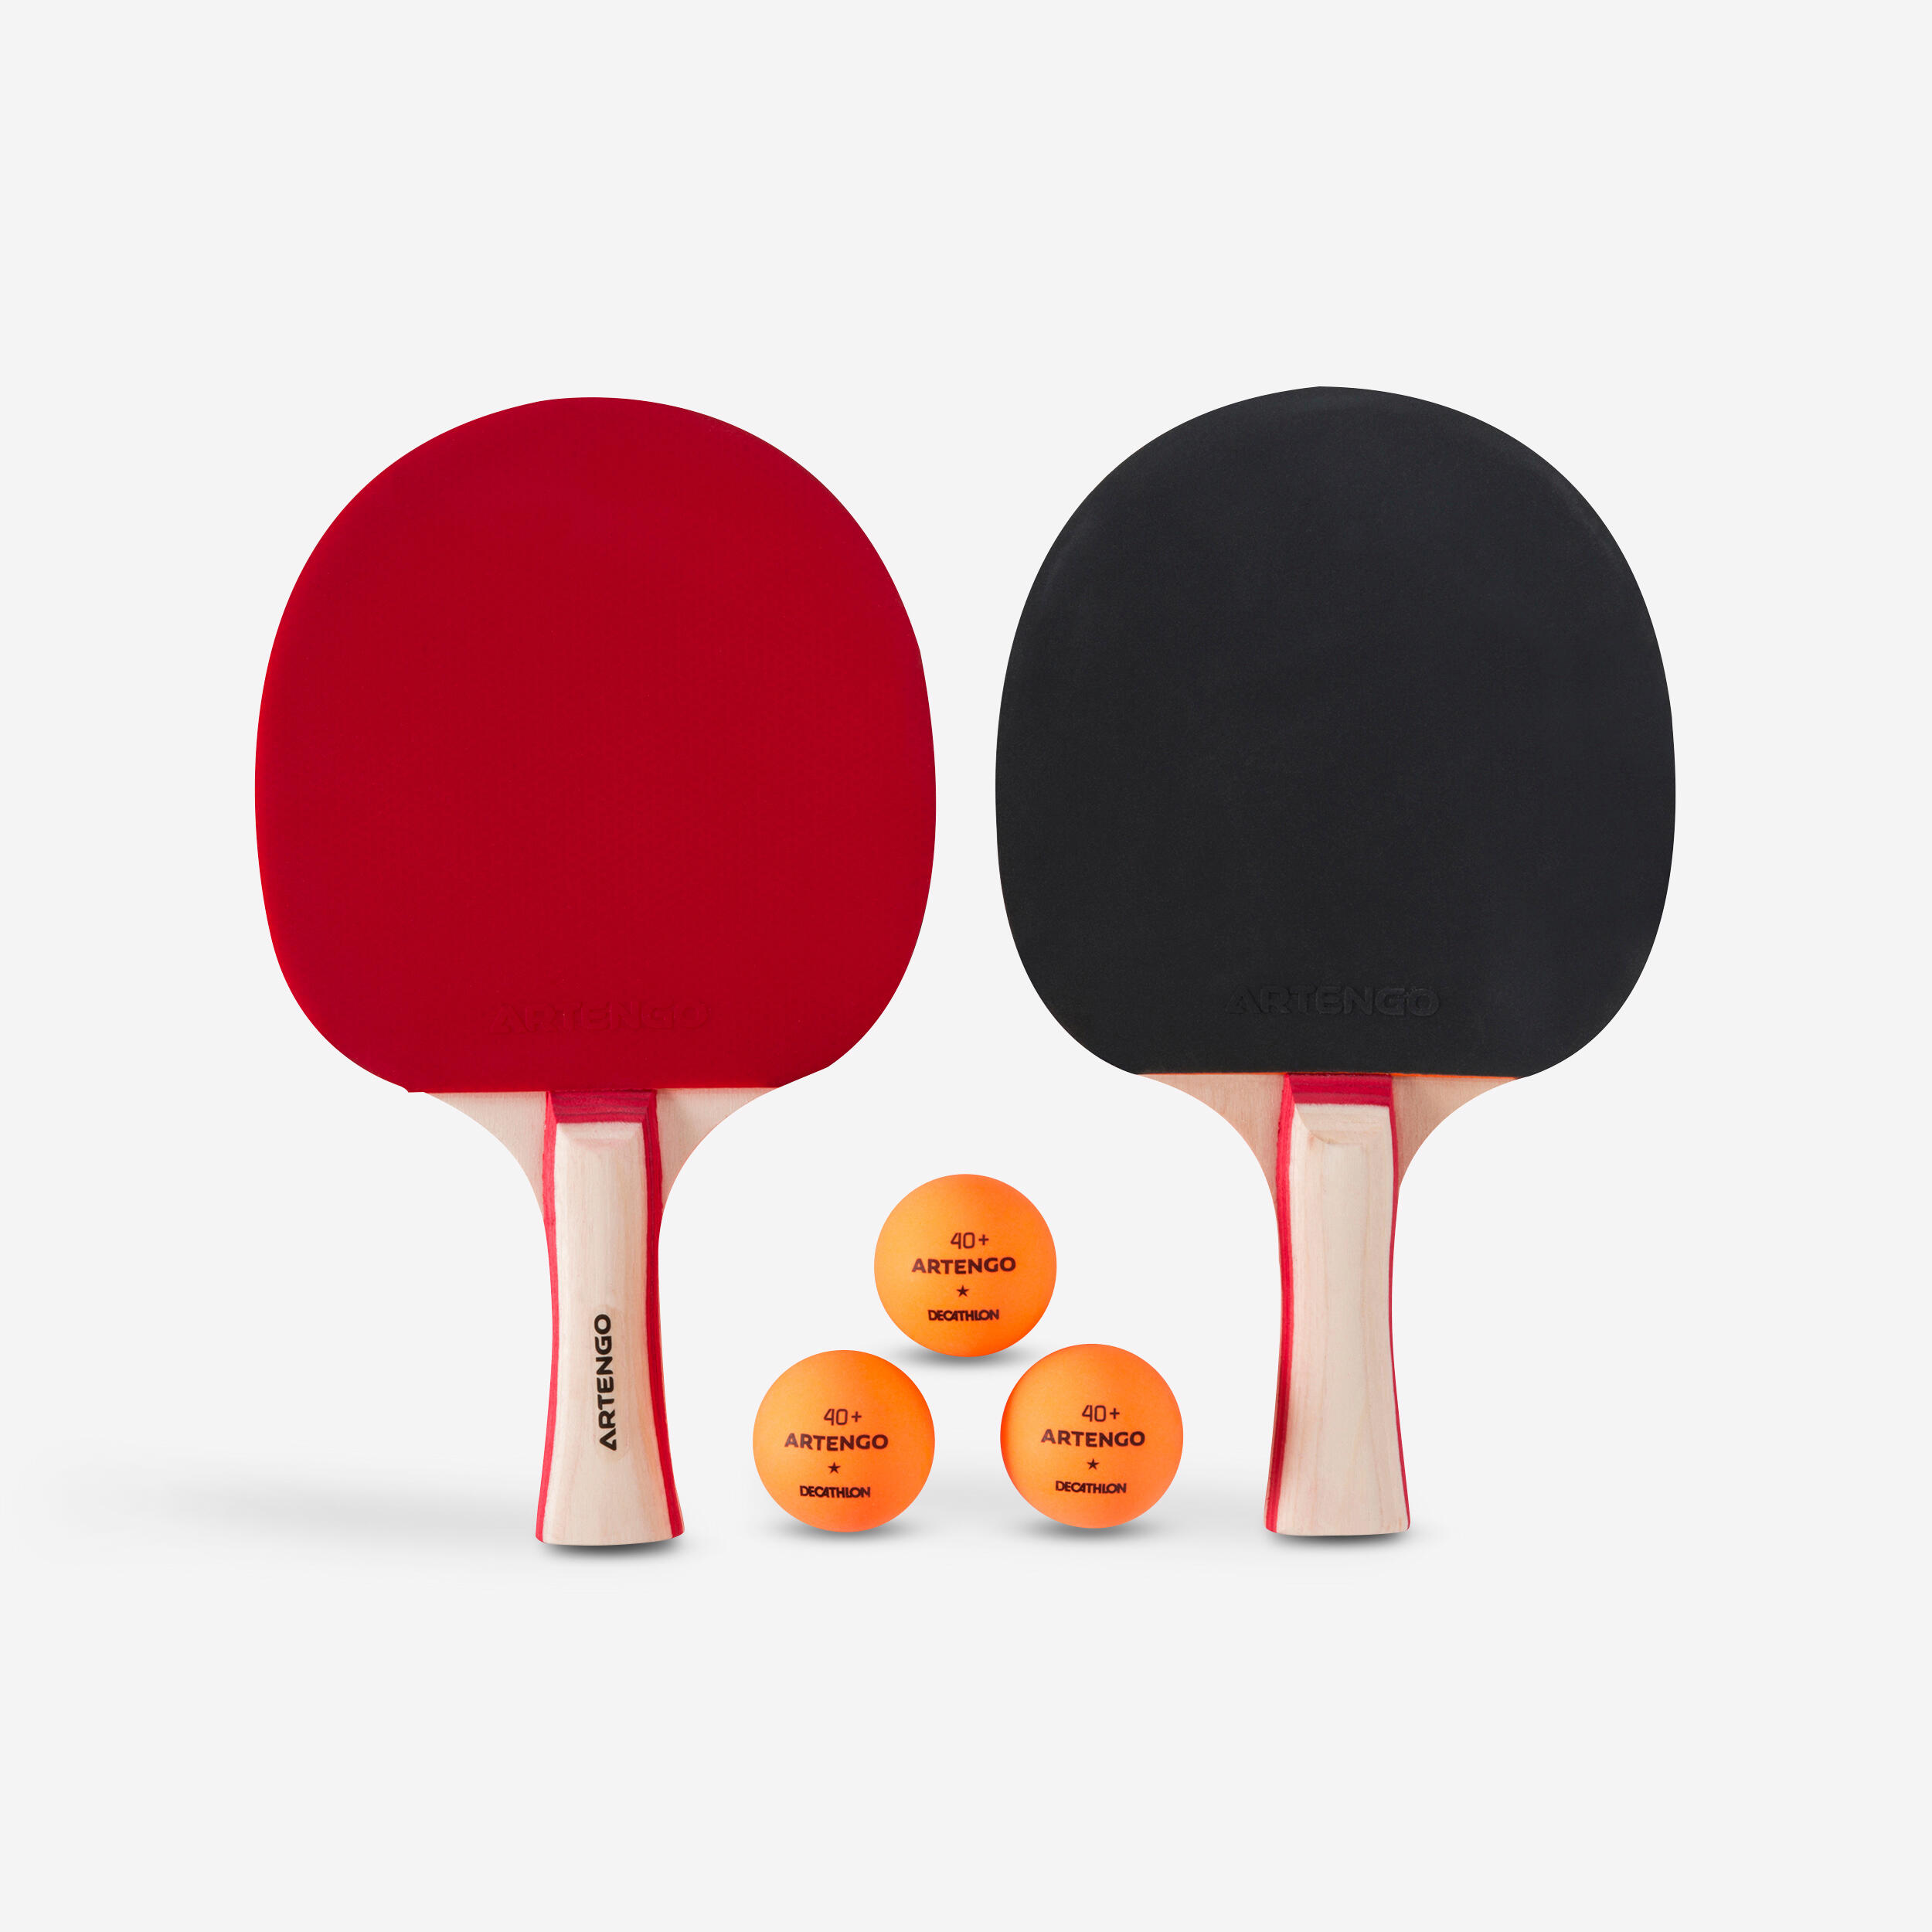 decathlon ping pong net